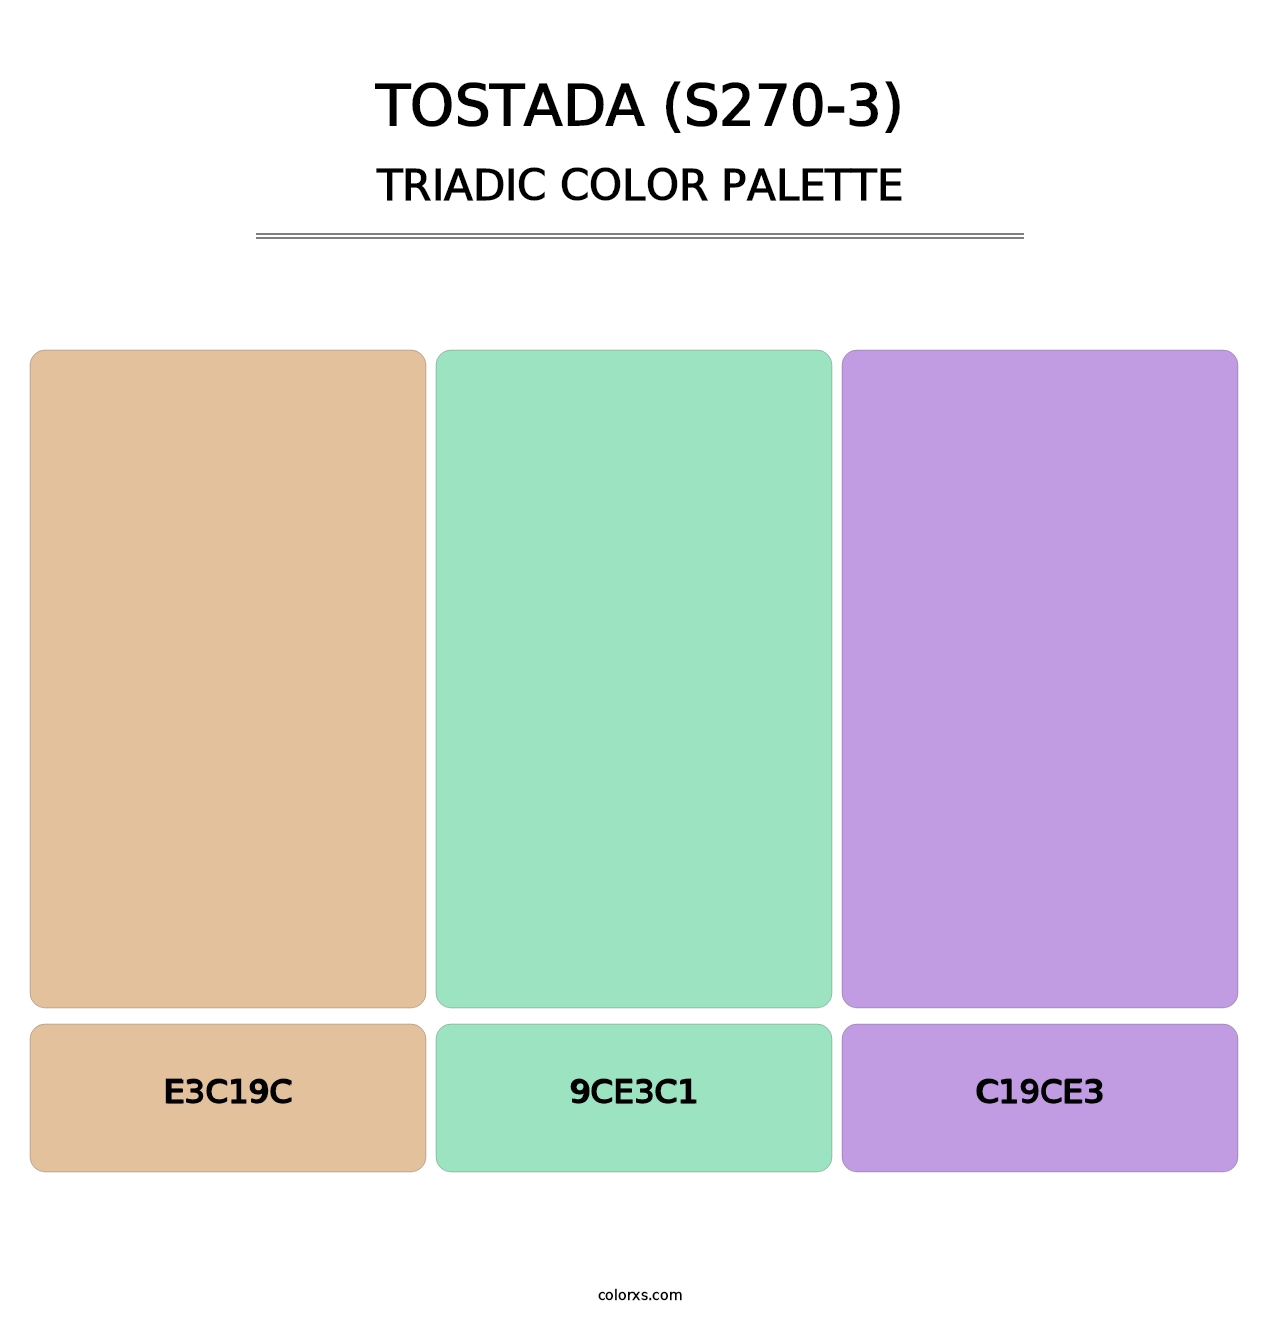 Tostada (S270-3) - Triadic Color Palette